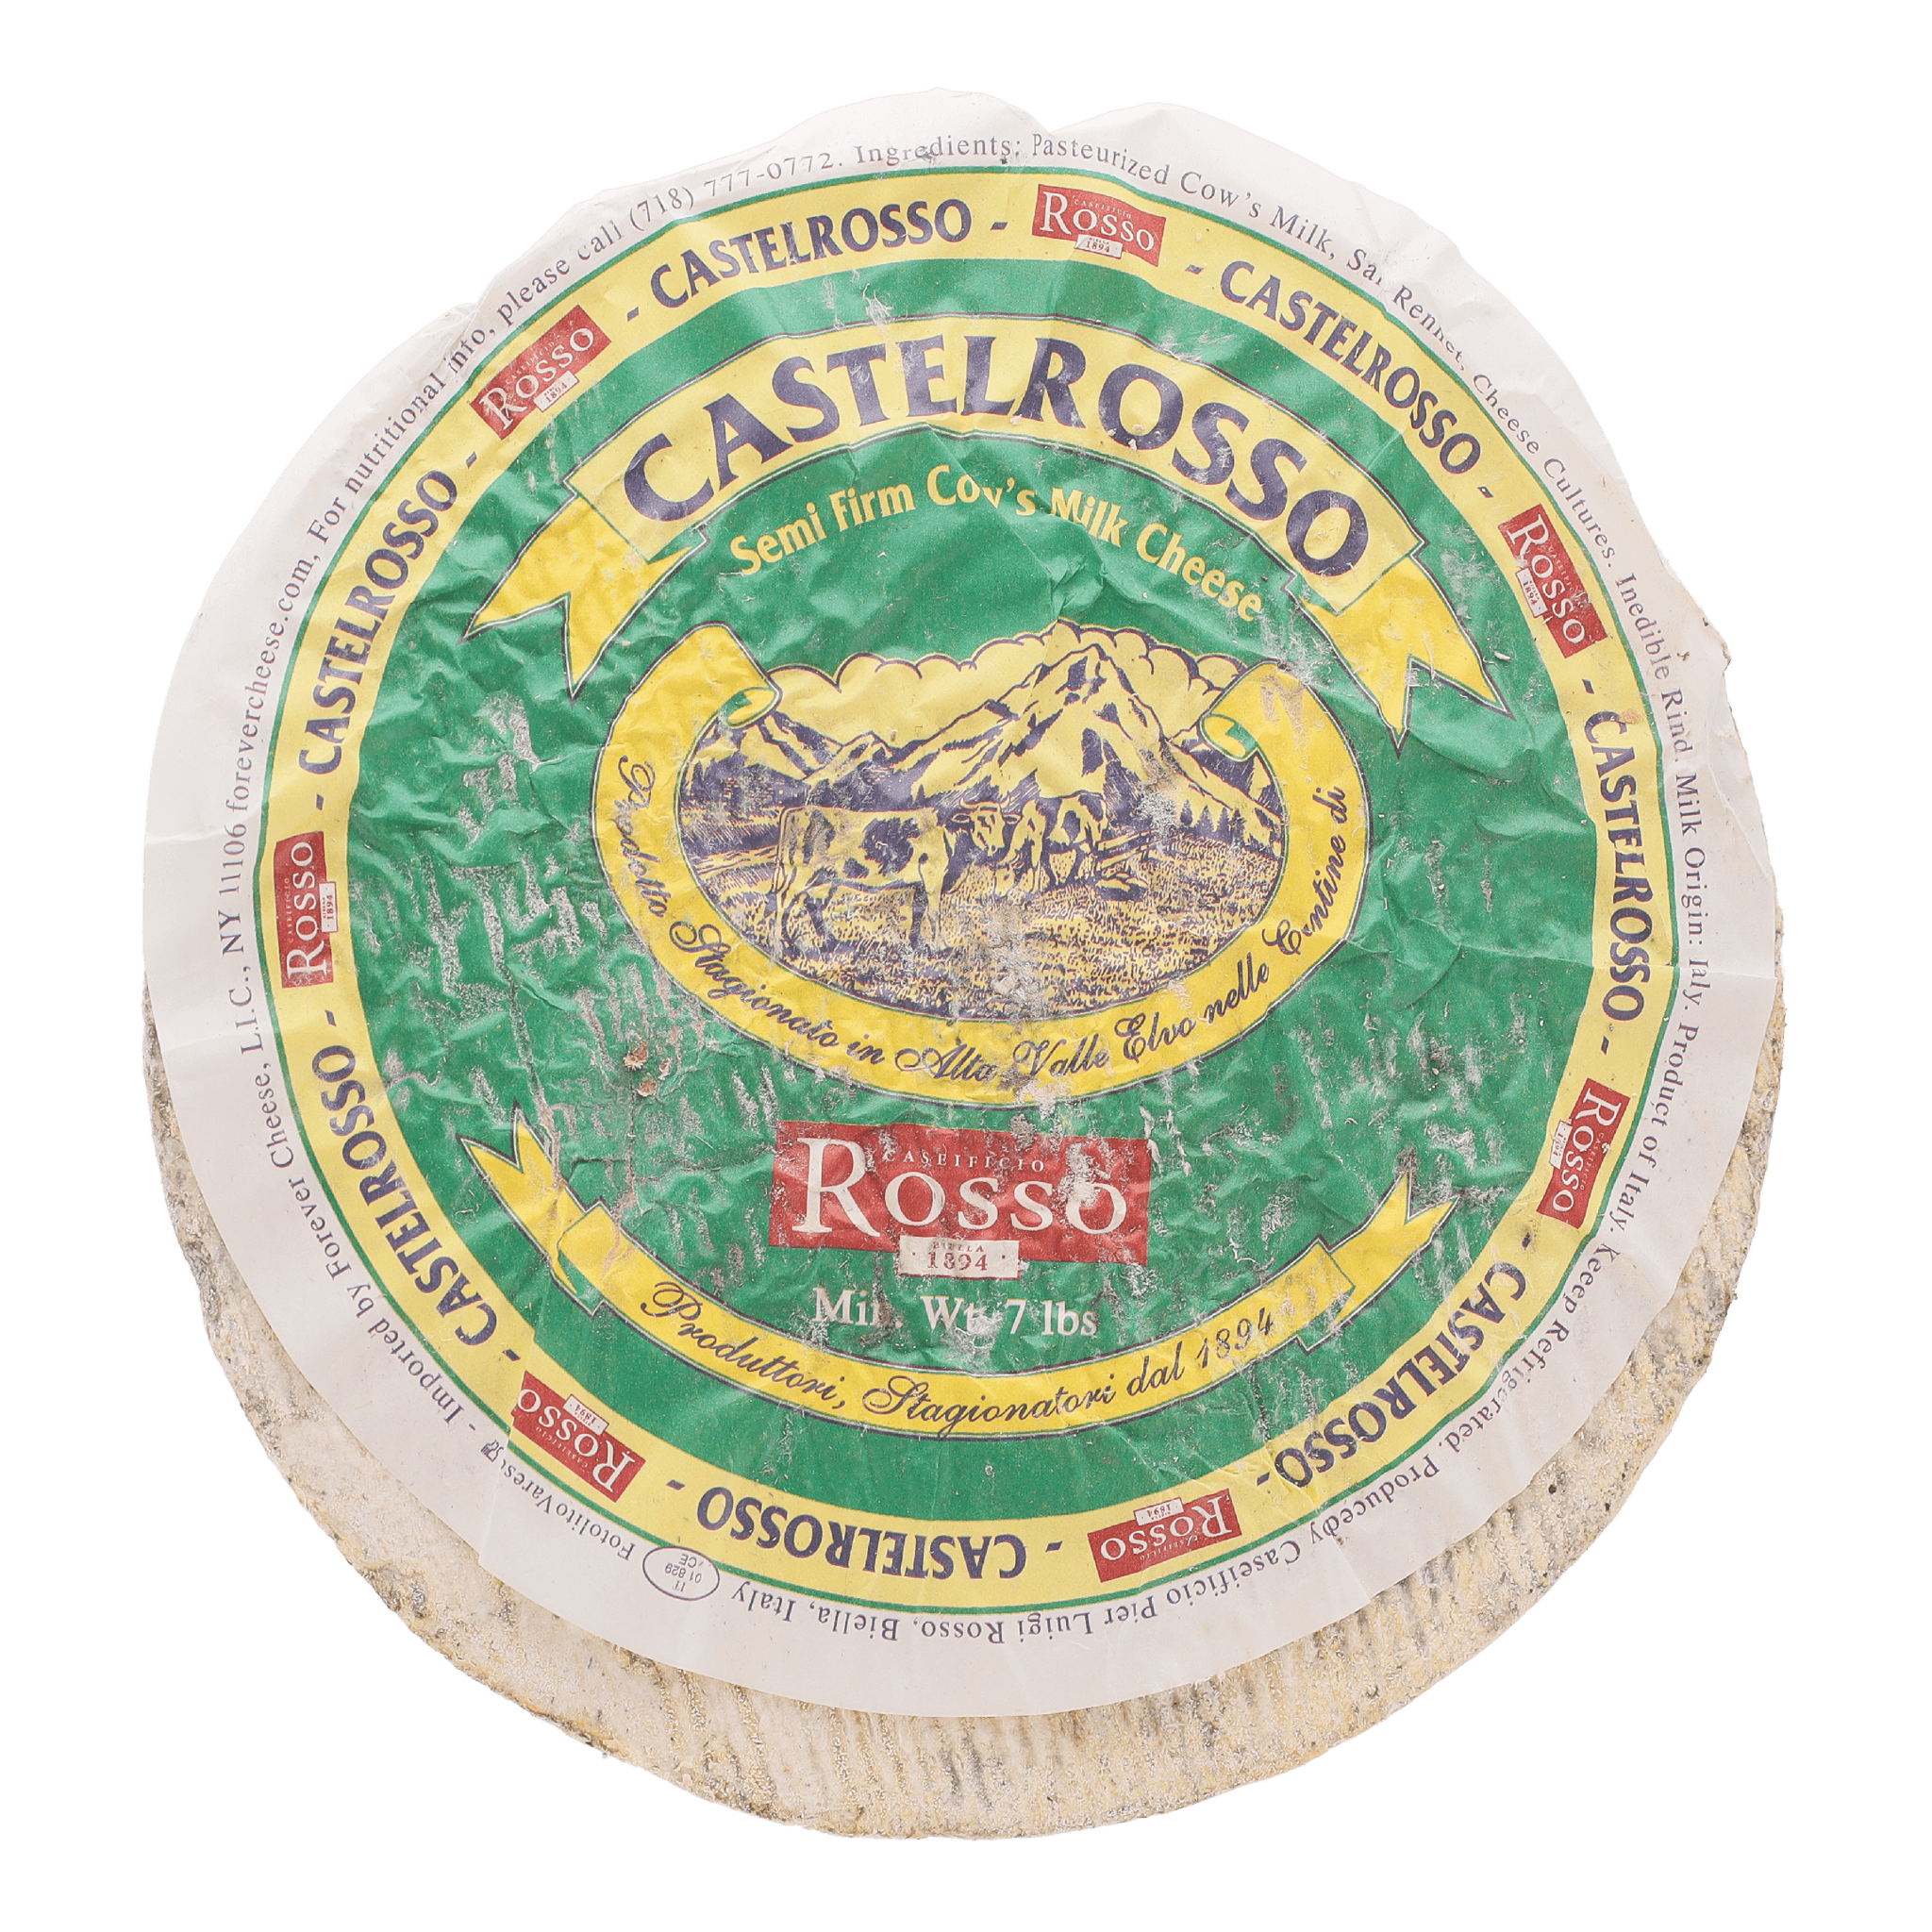 Castelrosso